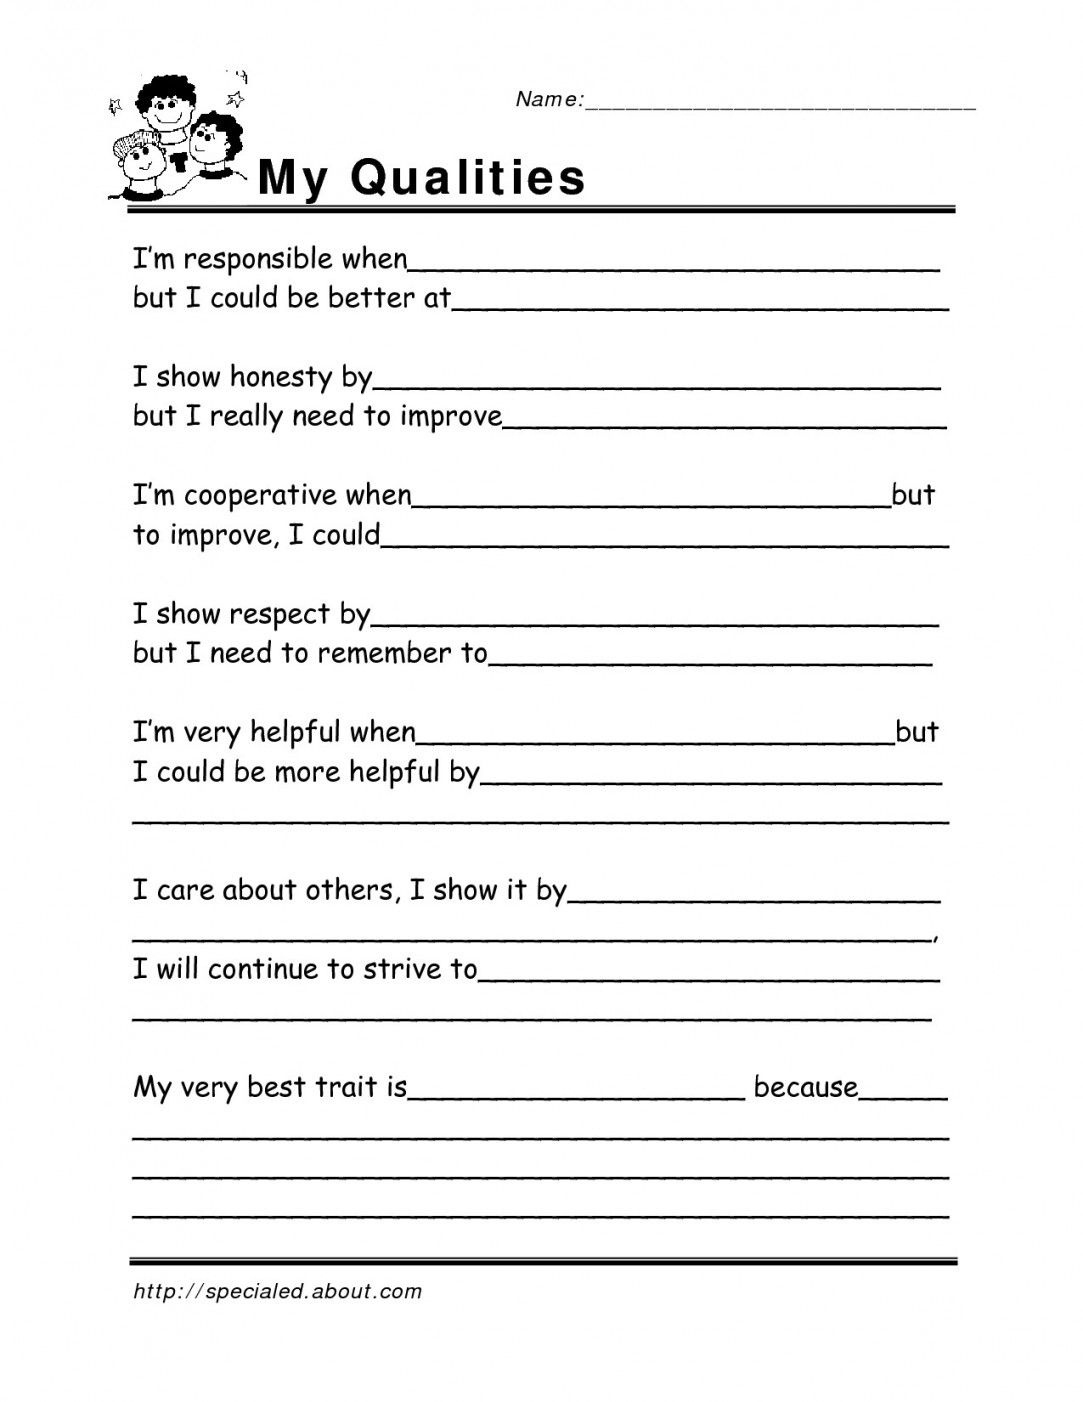 Free Printable Coping Skills Worksheets | Lostranquillos - Free - Free Printable Coping Skills Worksheets